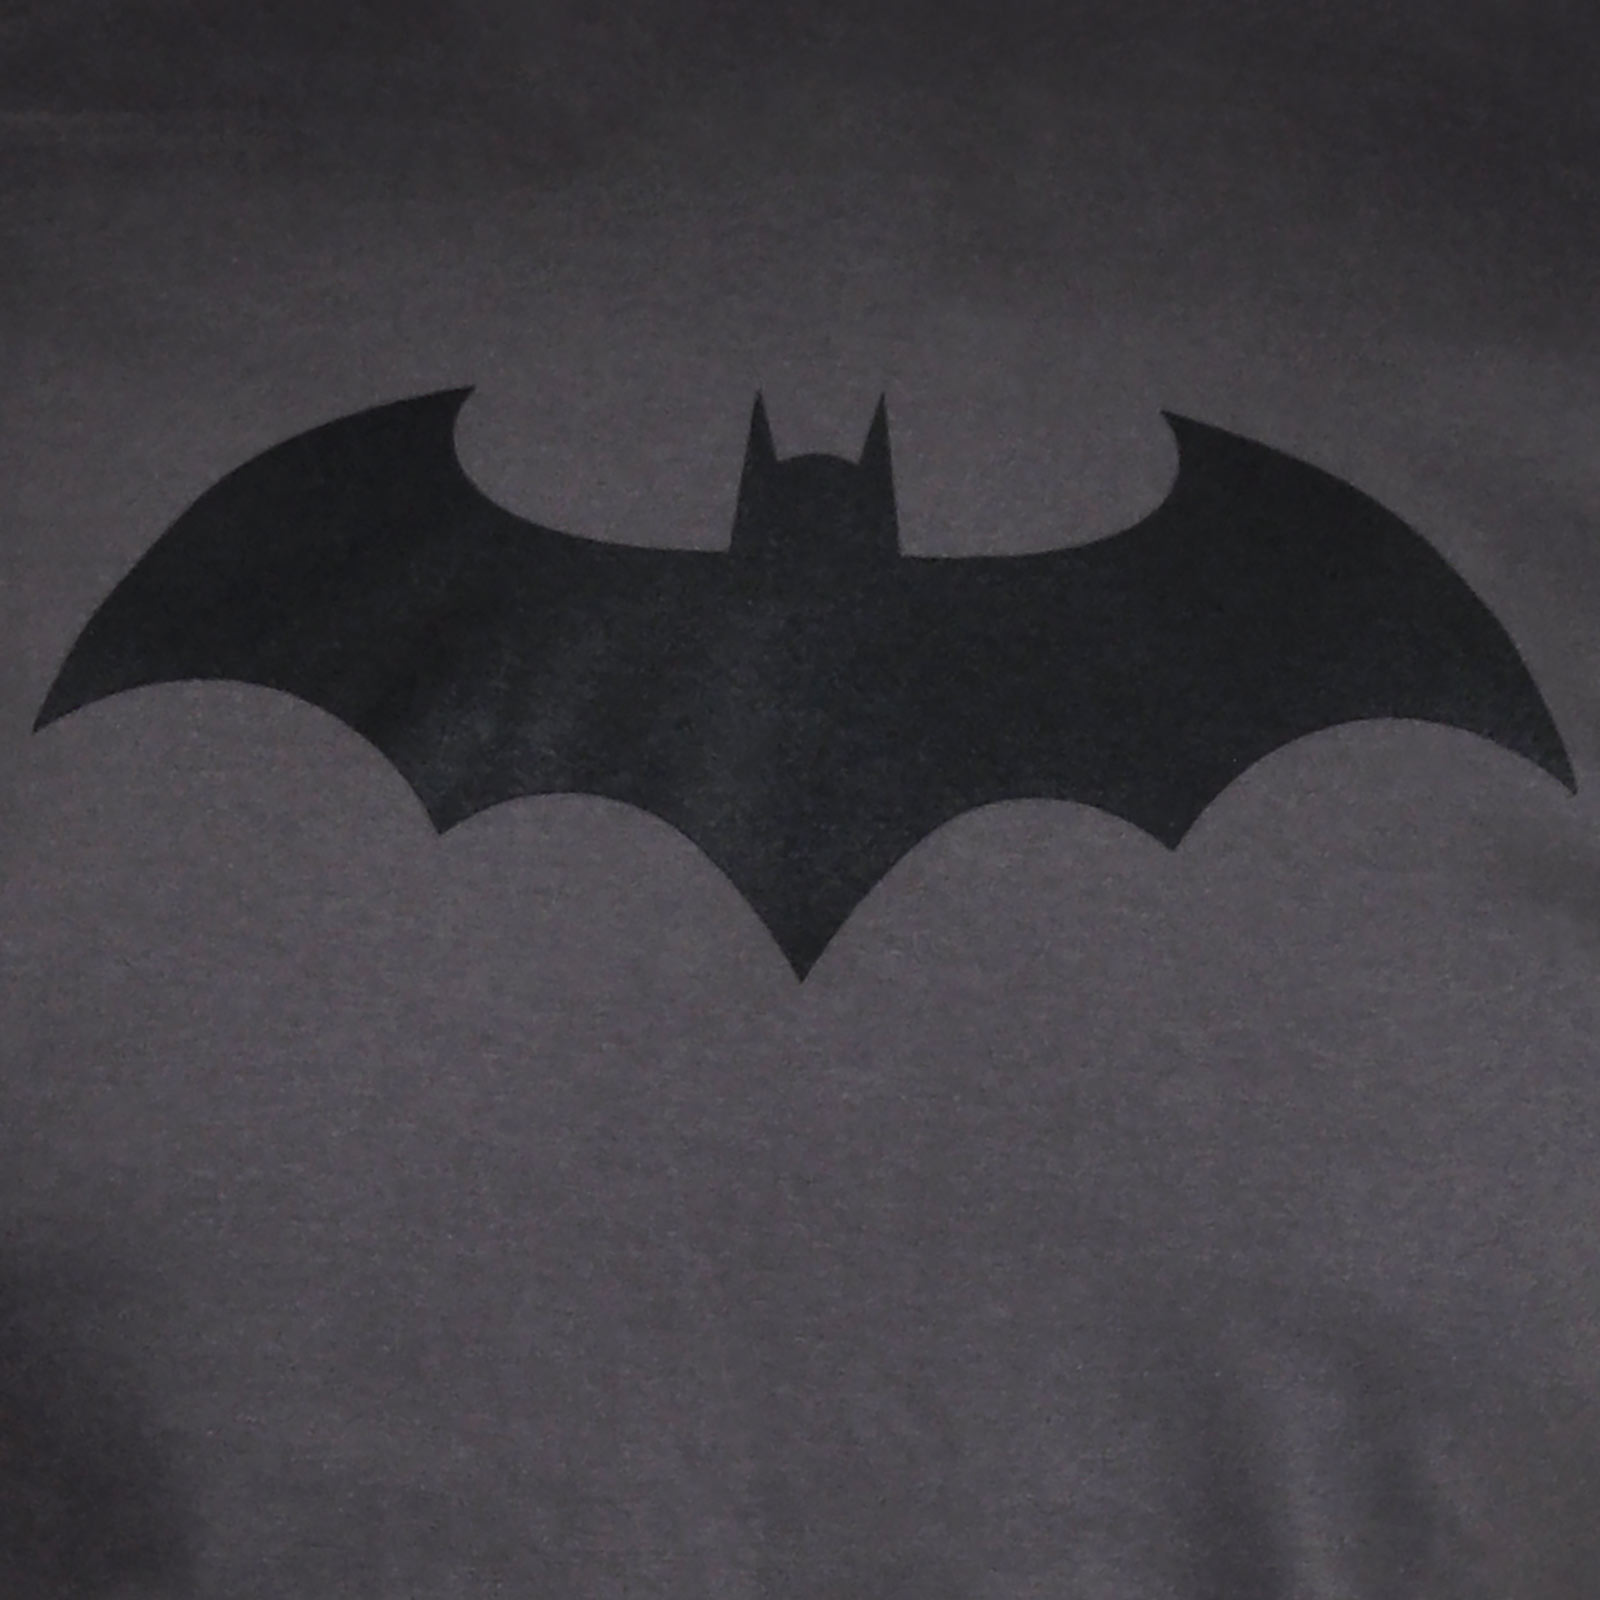 Batman - T-shirt Bat Logo gris